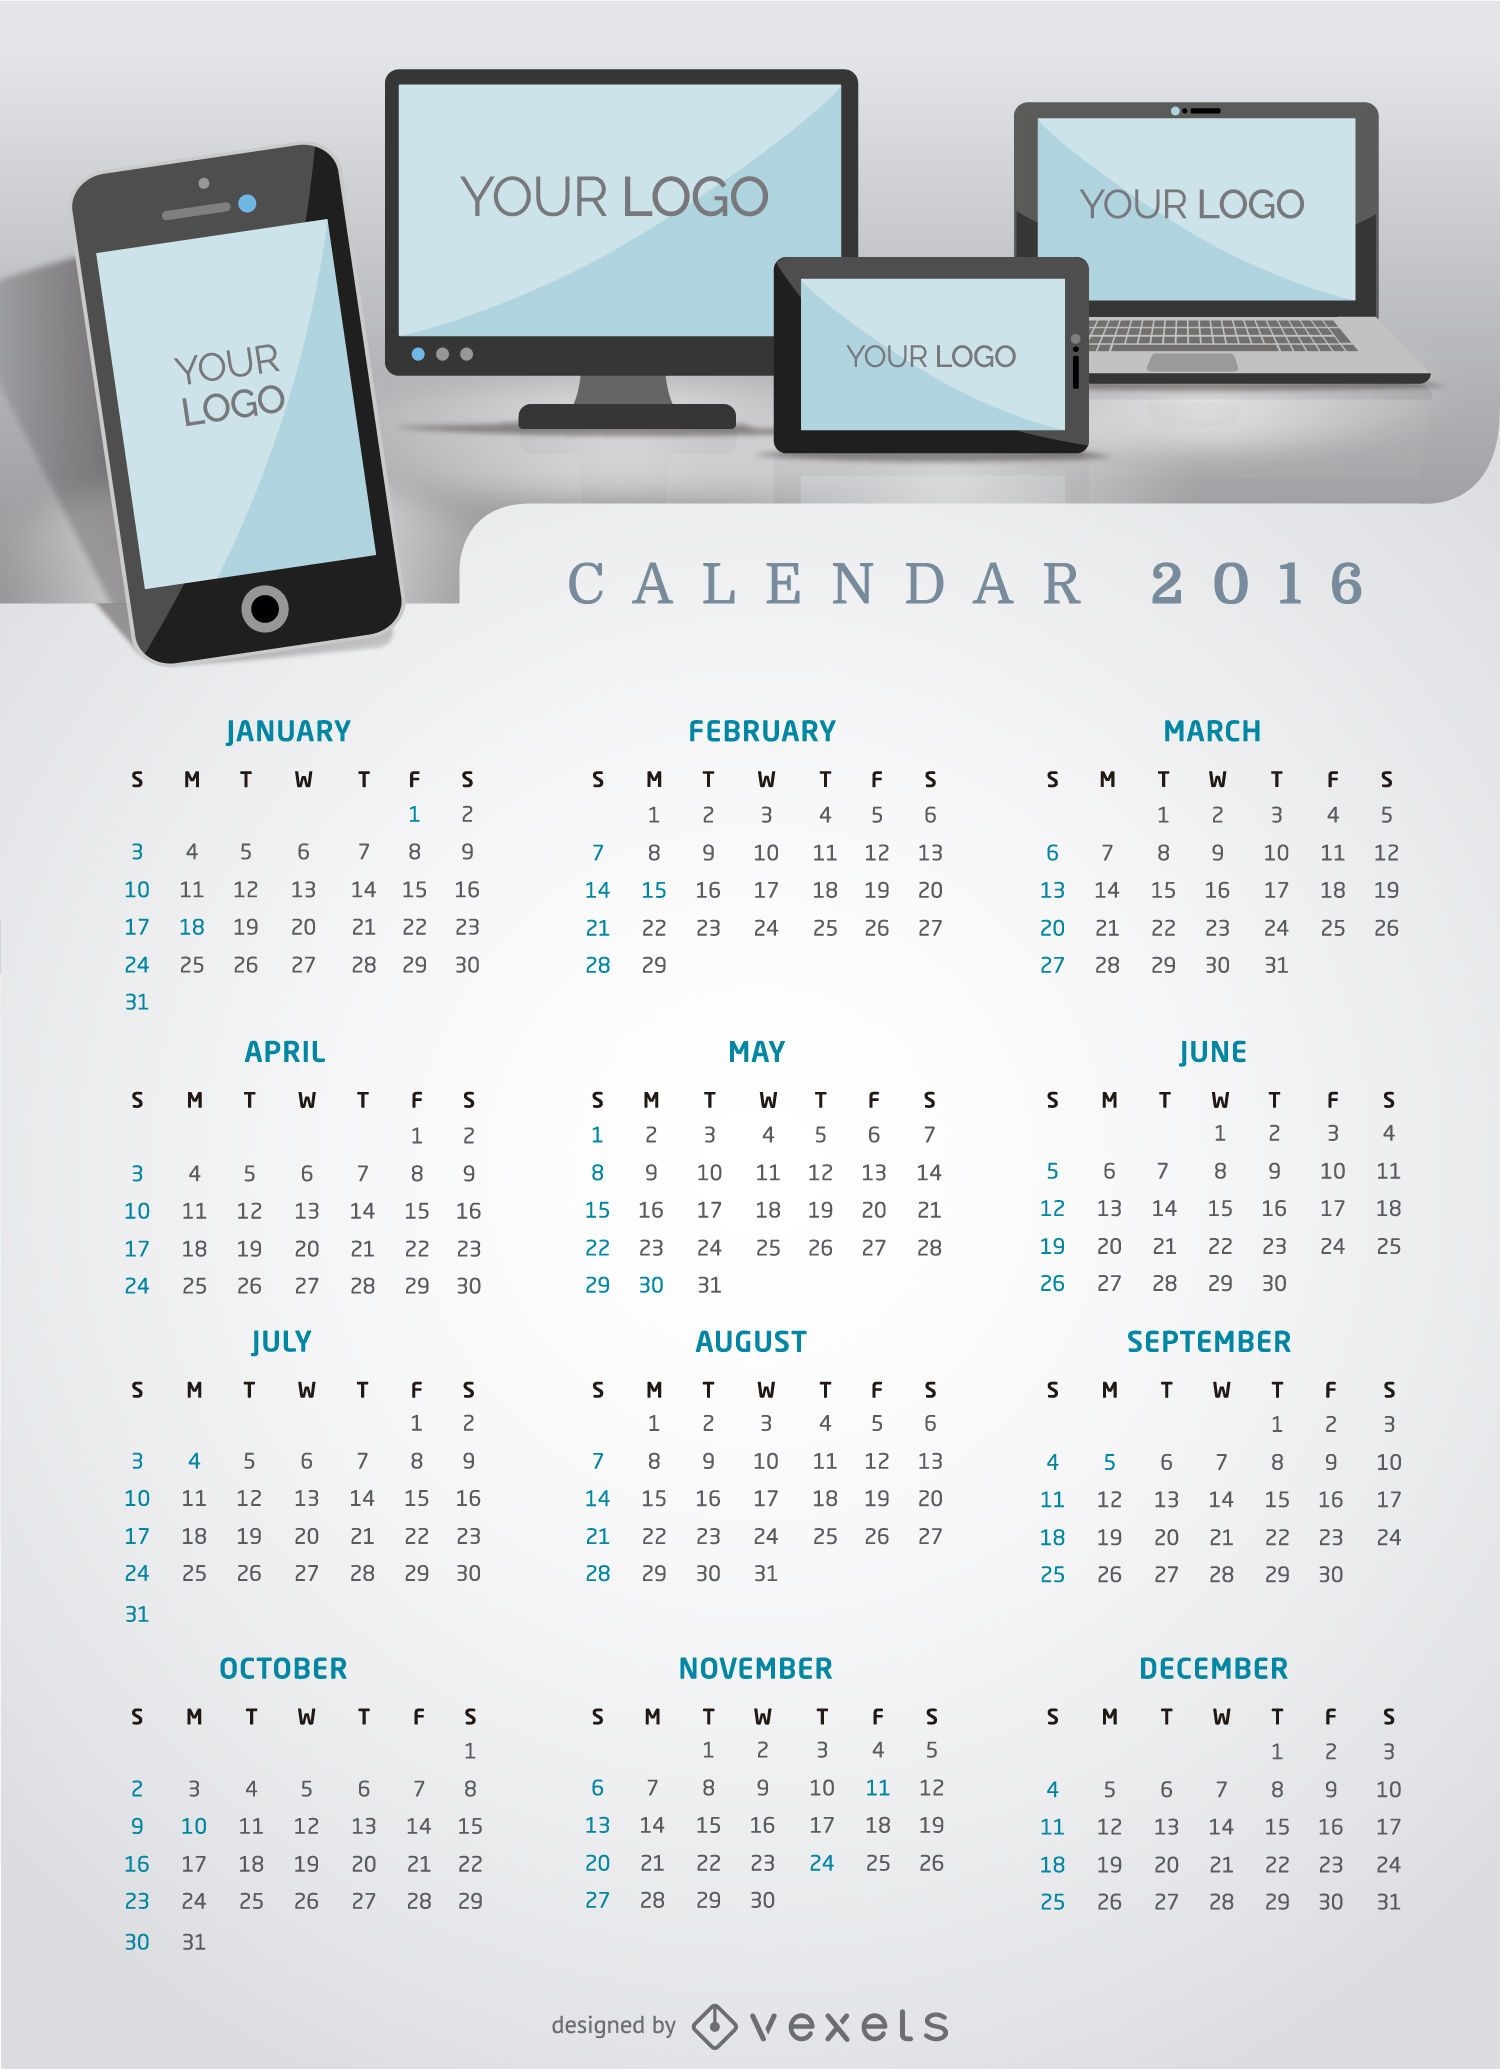 Kalender 2016 Multiplattform-App oder Website